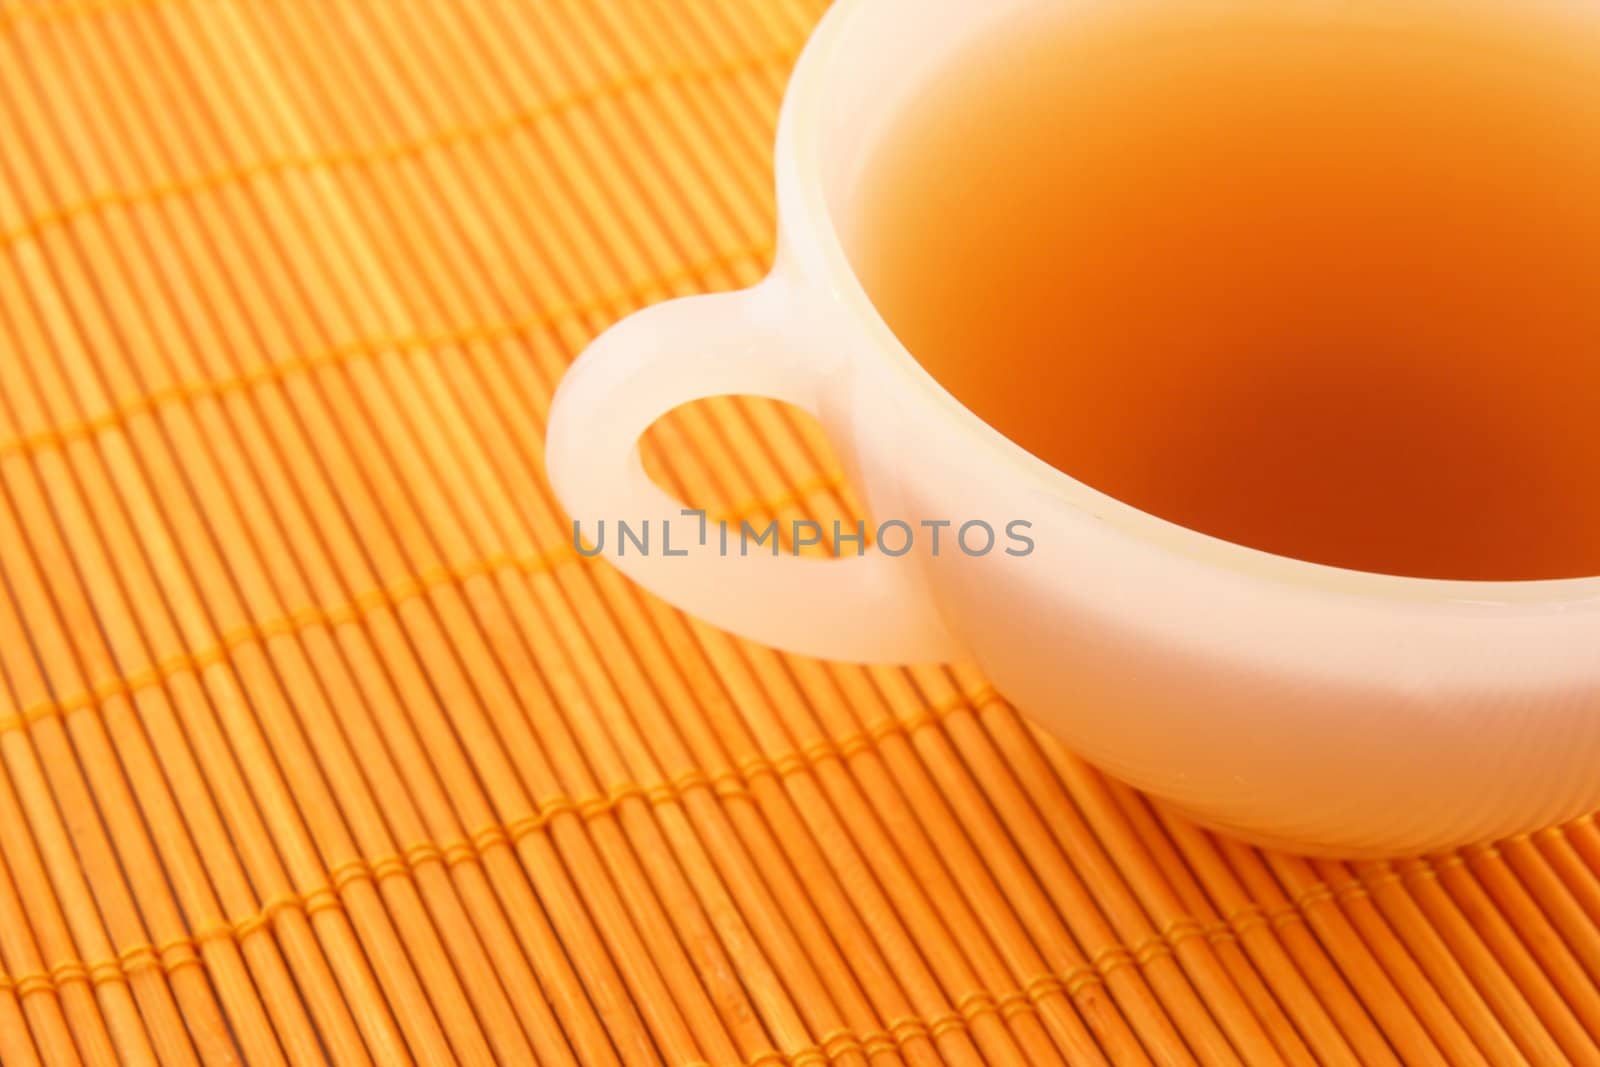 Cup of tea on orange rattan mat in warm colors.